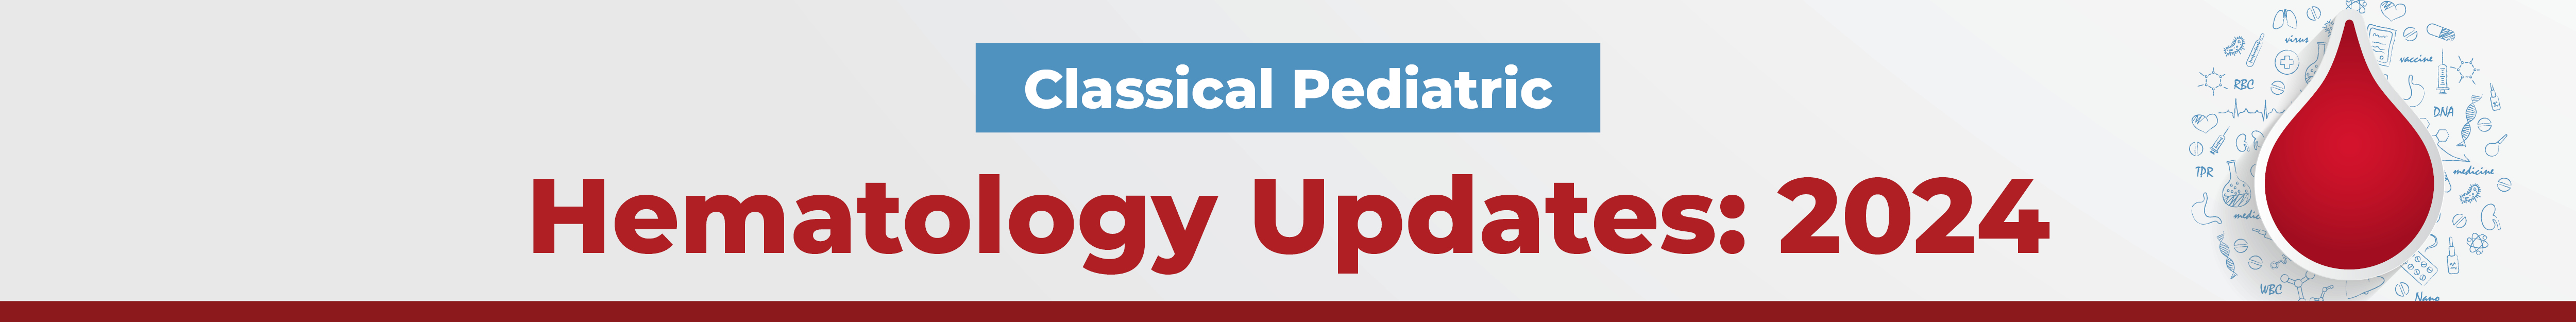 Classical Pediatric Hematology Updates: 2024 Banner